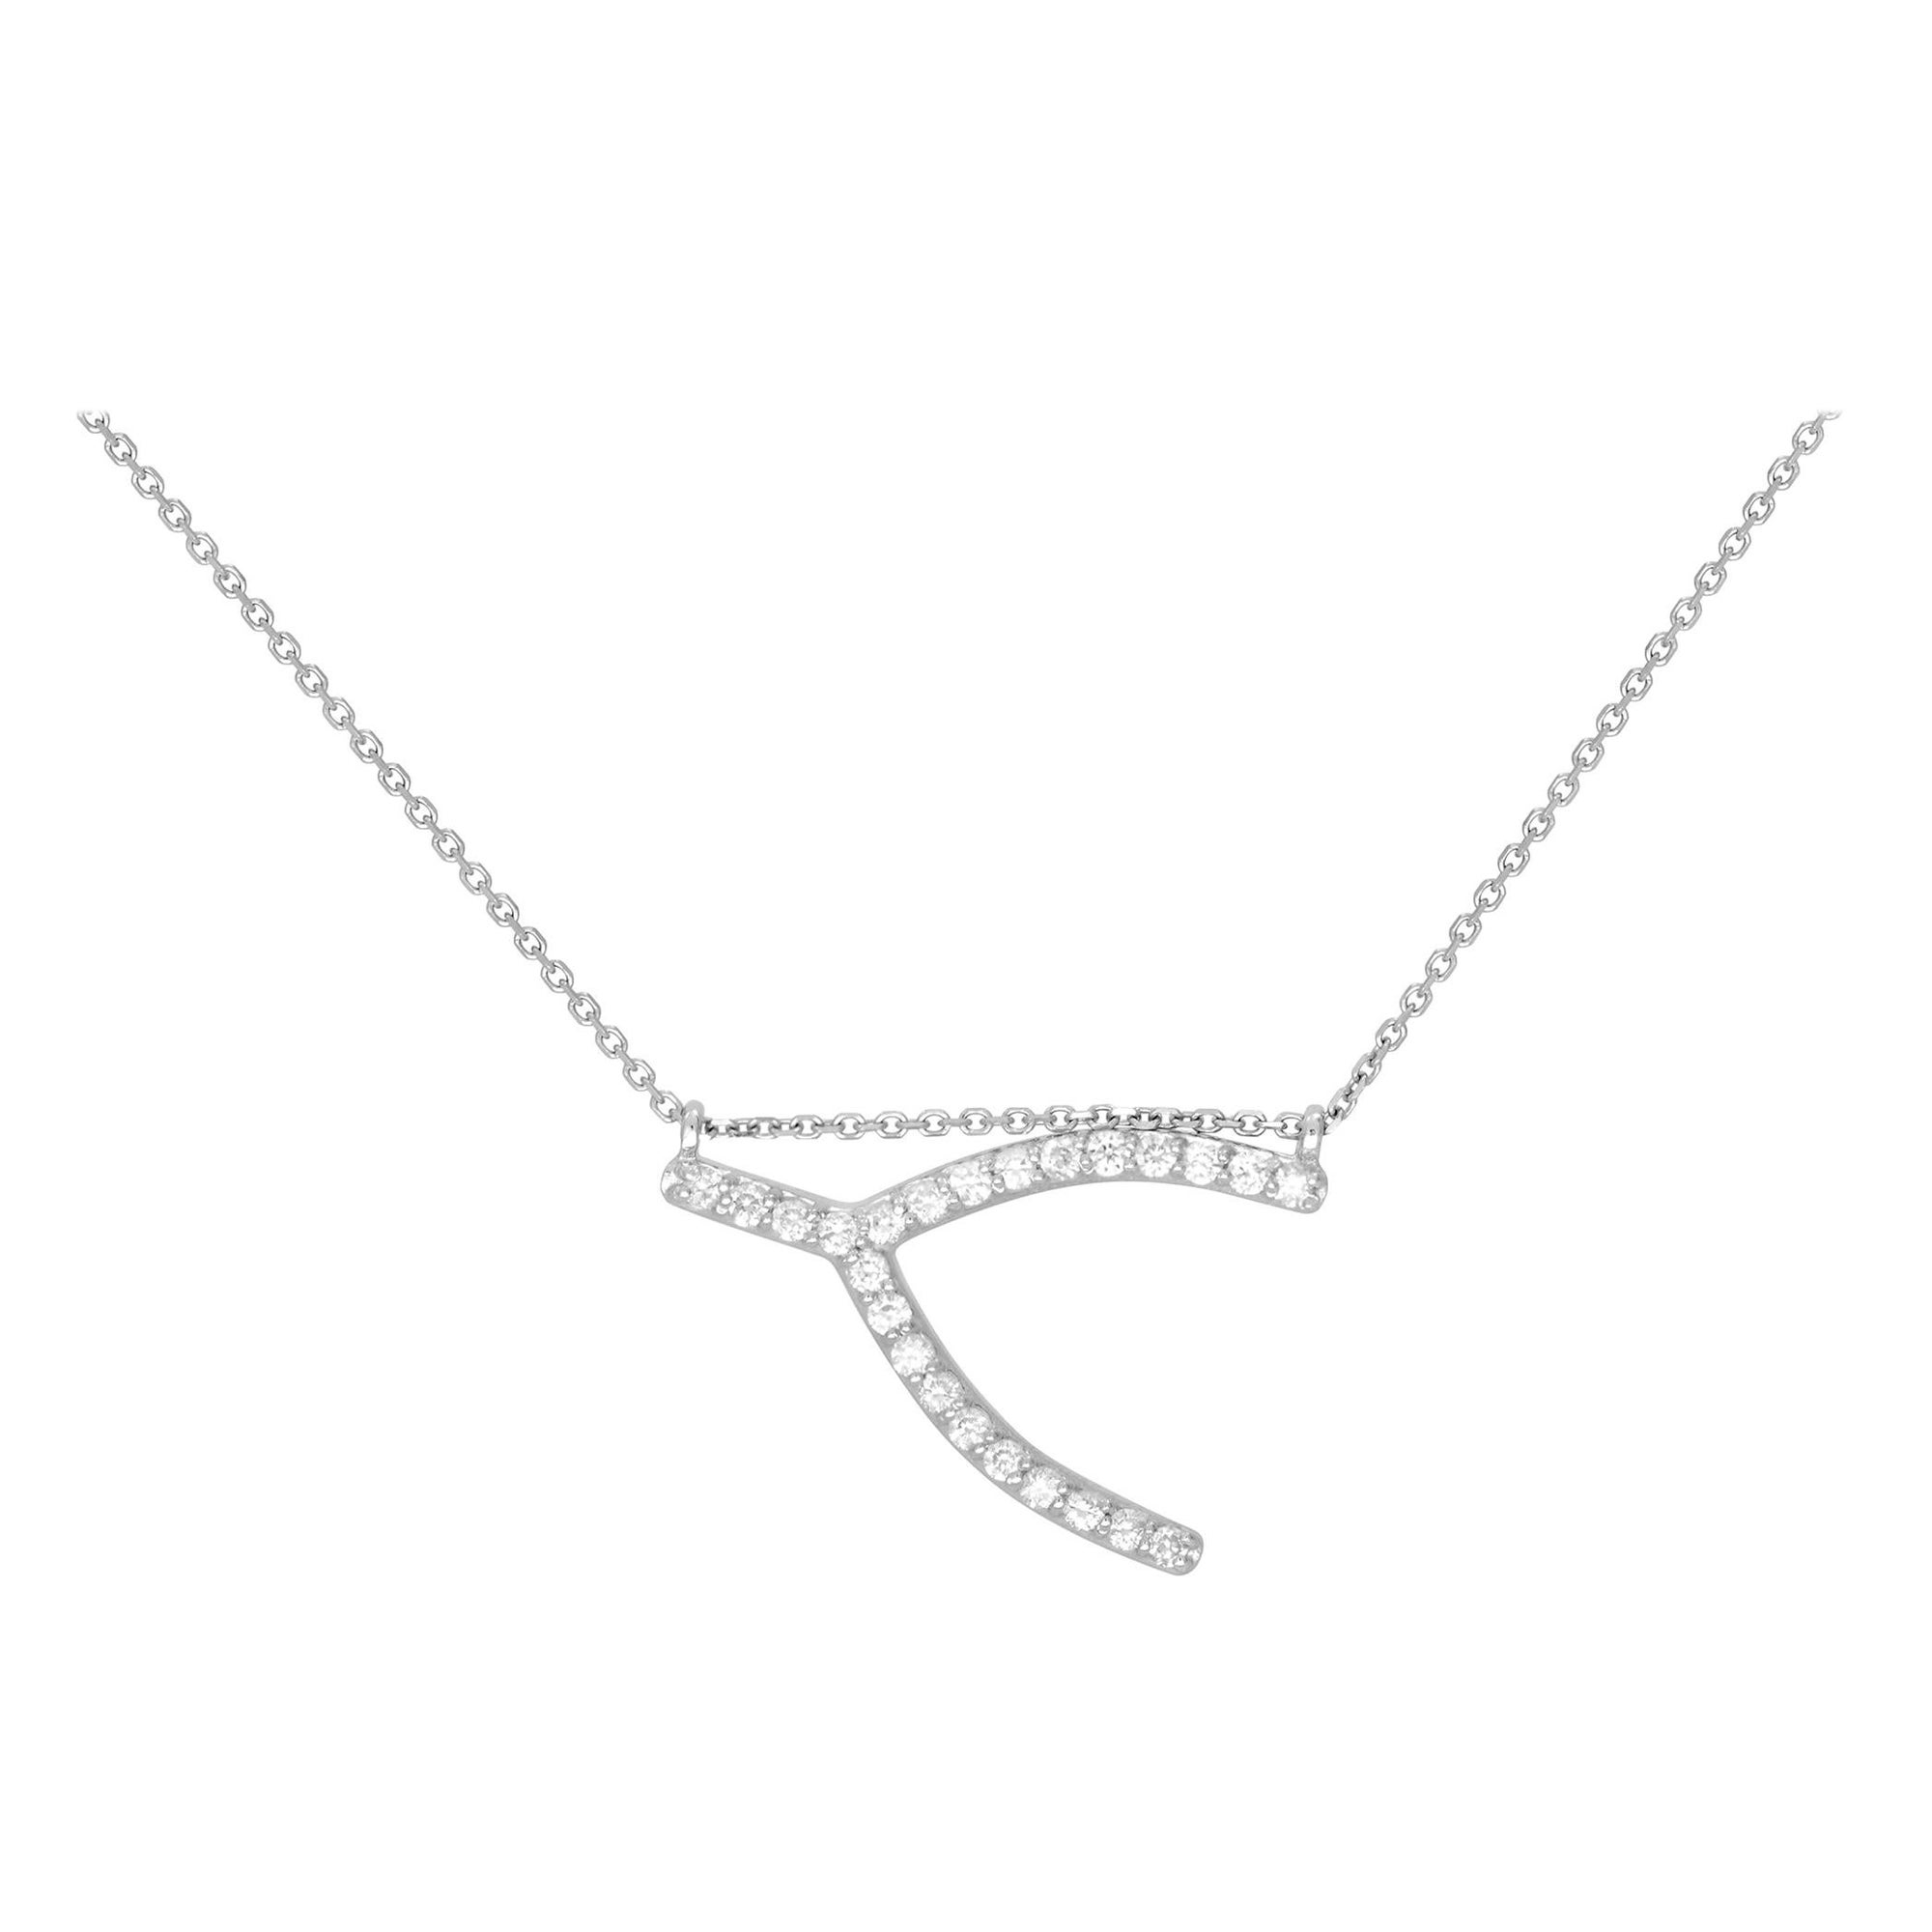 Rachel Koen Sideways Wishbone Necklace 14K White Gold 0.24Cttw For Sale